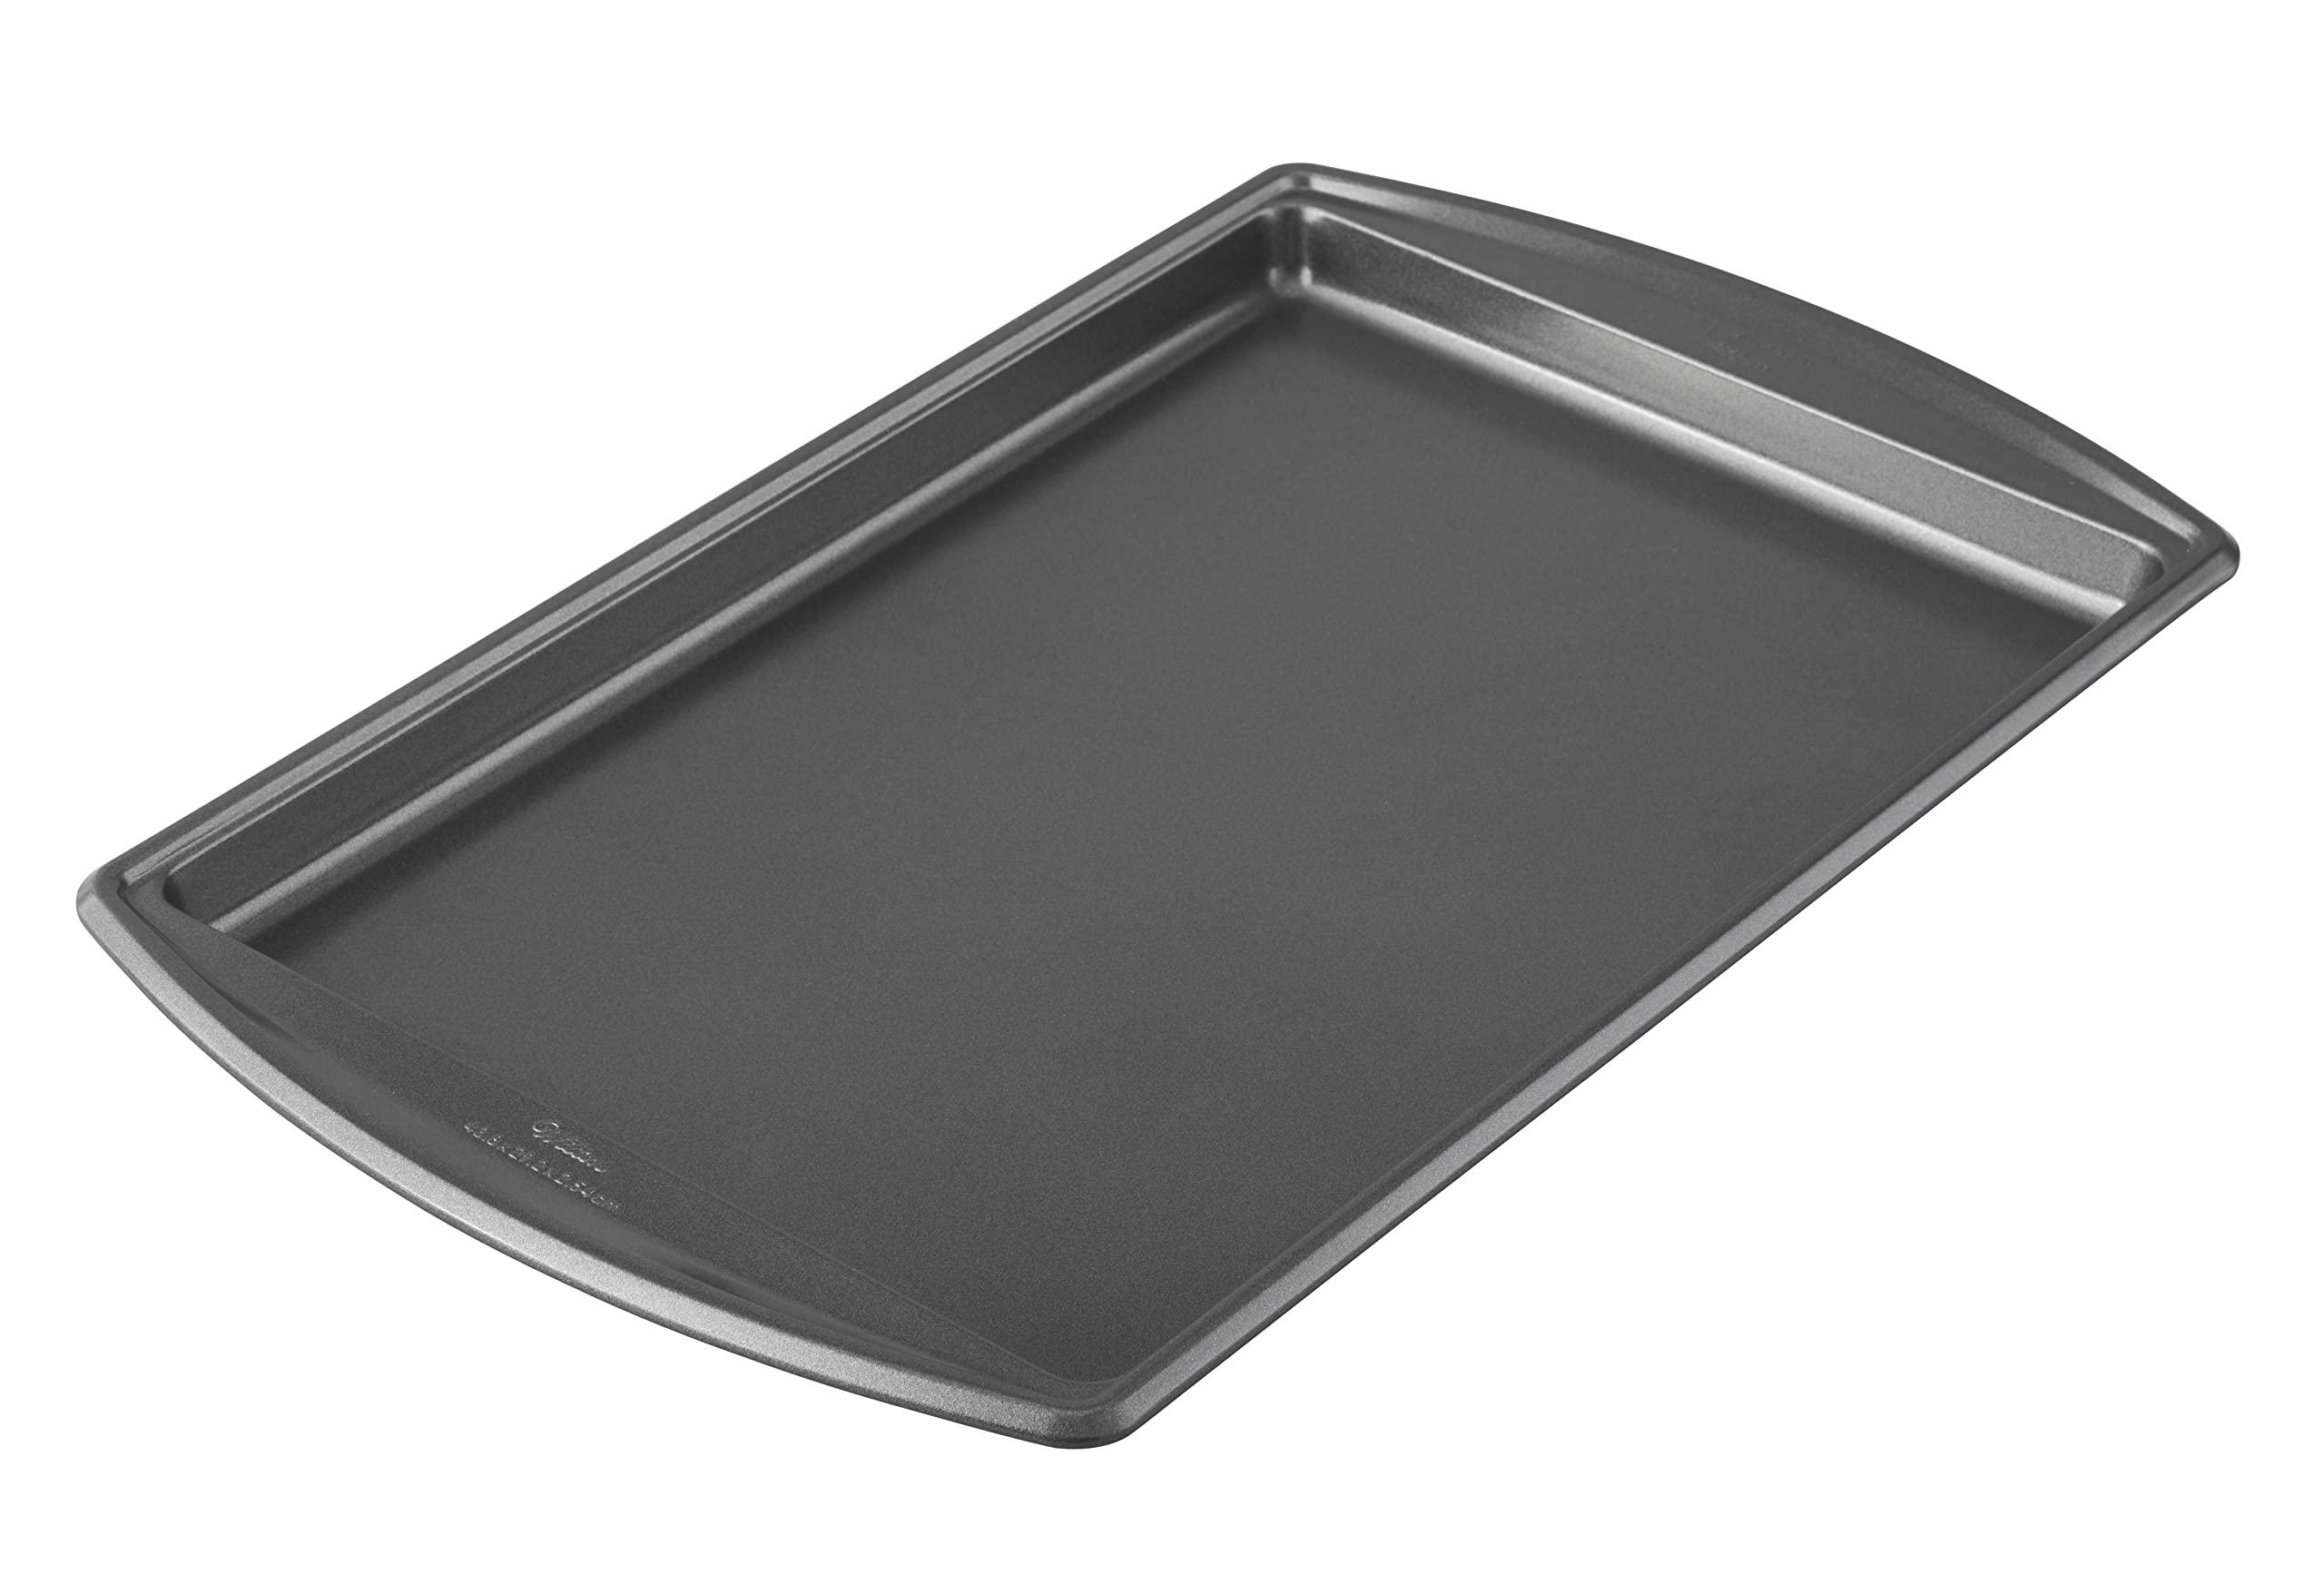 wilton advance select premium non-stick large baking sheet, 17.25 x 11.5-inch, steel, silver